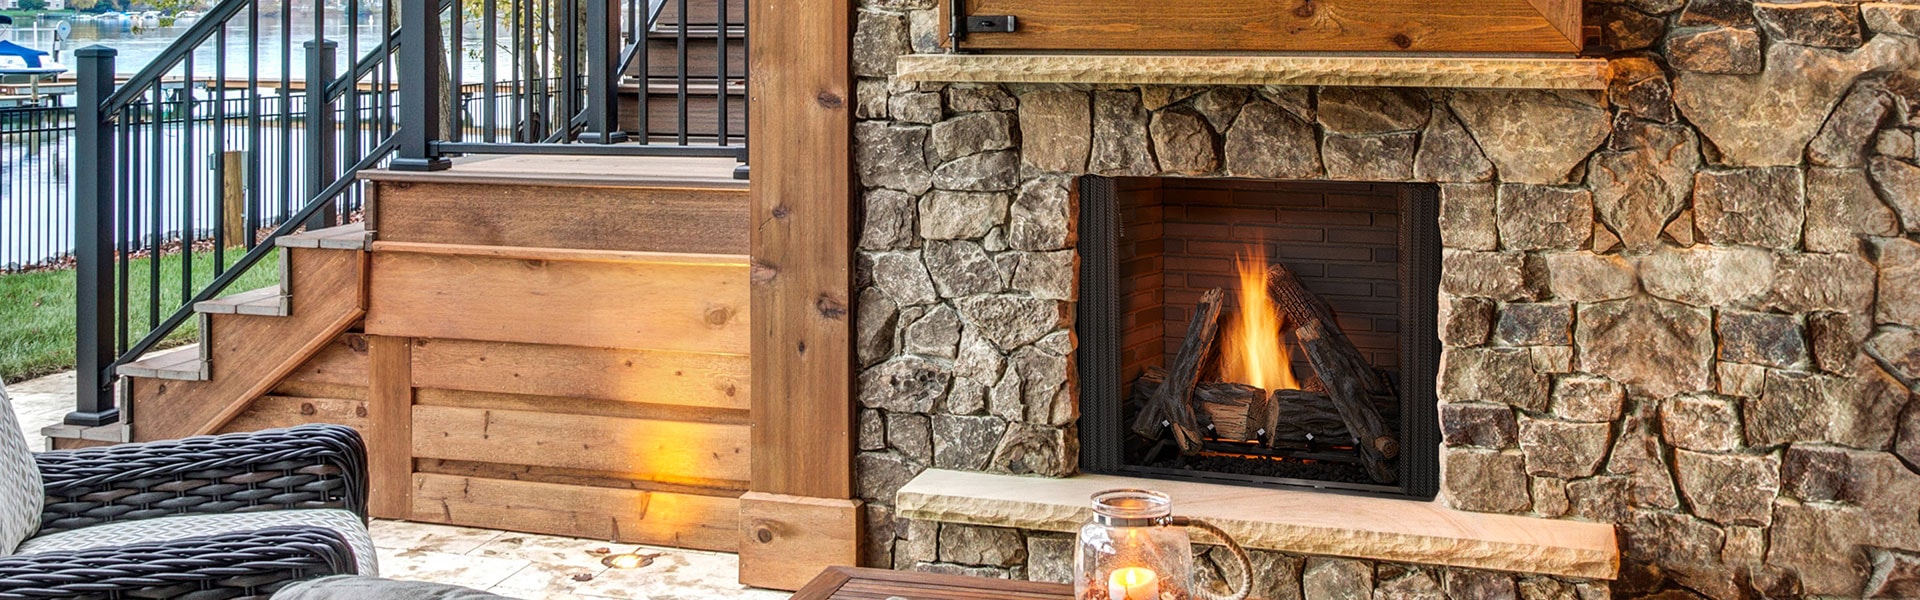 Heat N Glo Fireplace Flame Adjustment Beautiful Courtyard Gas Fireplace